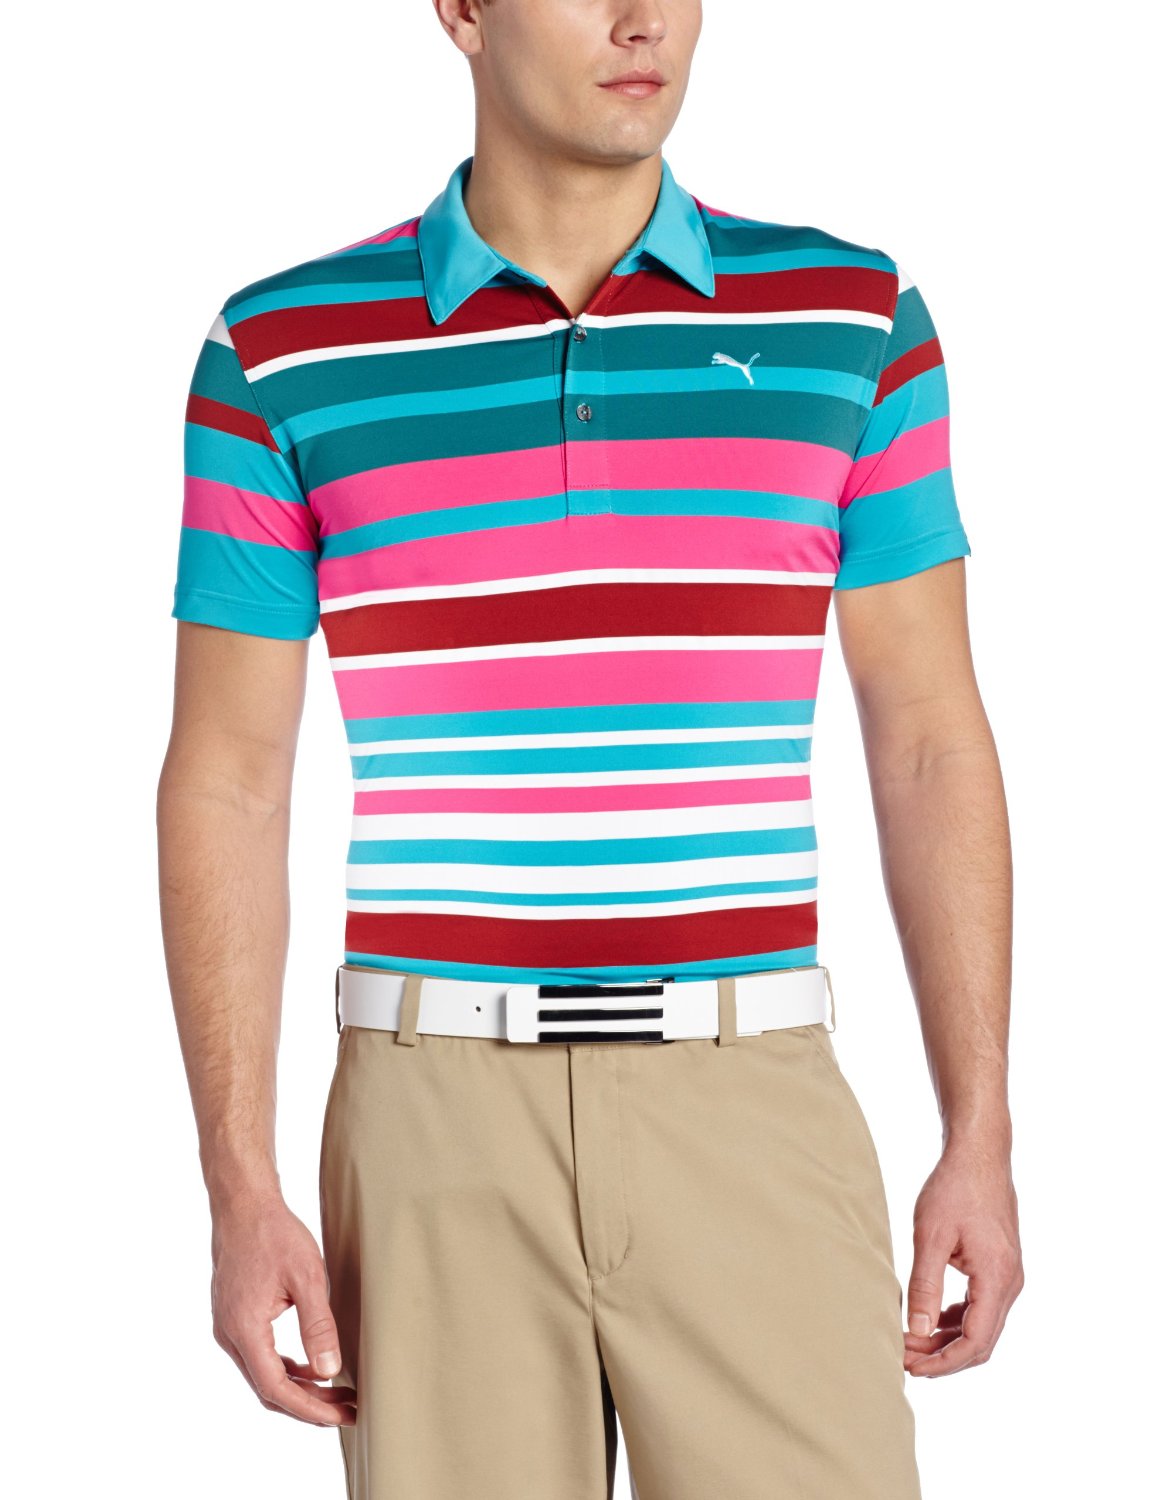 puma shirts golf